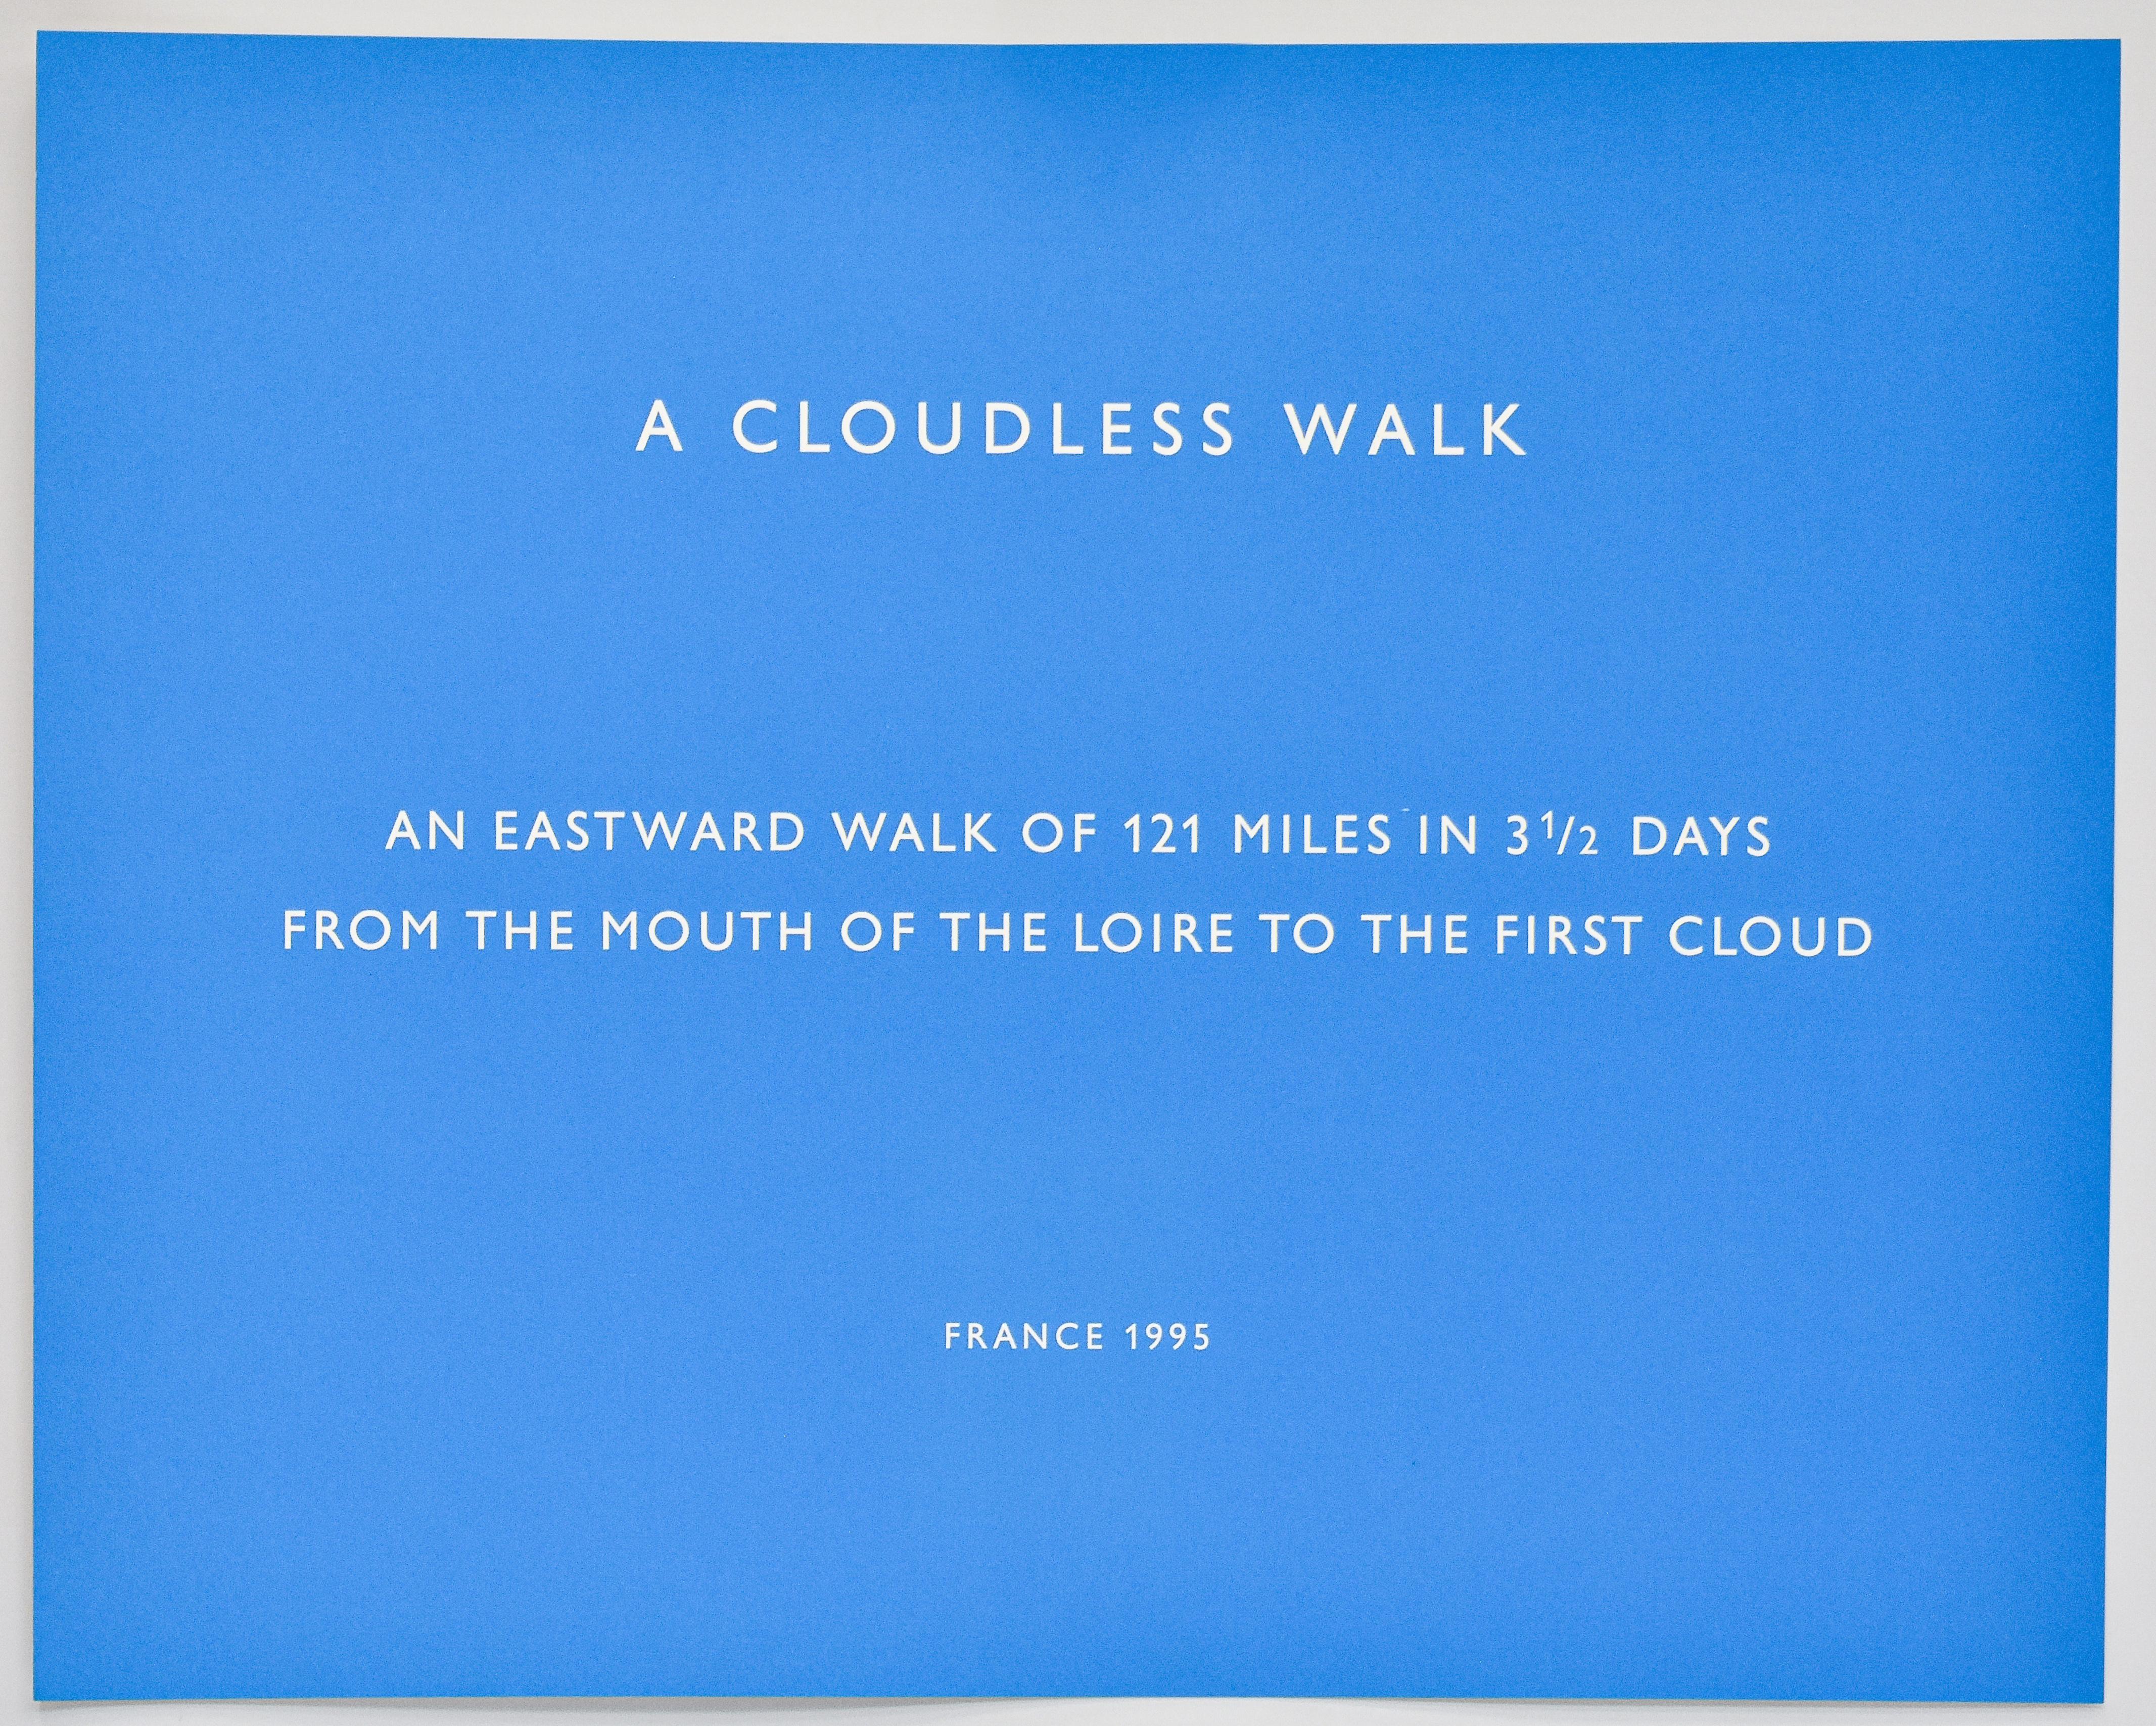 A cloudless Walk  - Print by Richard Long